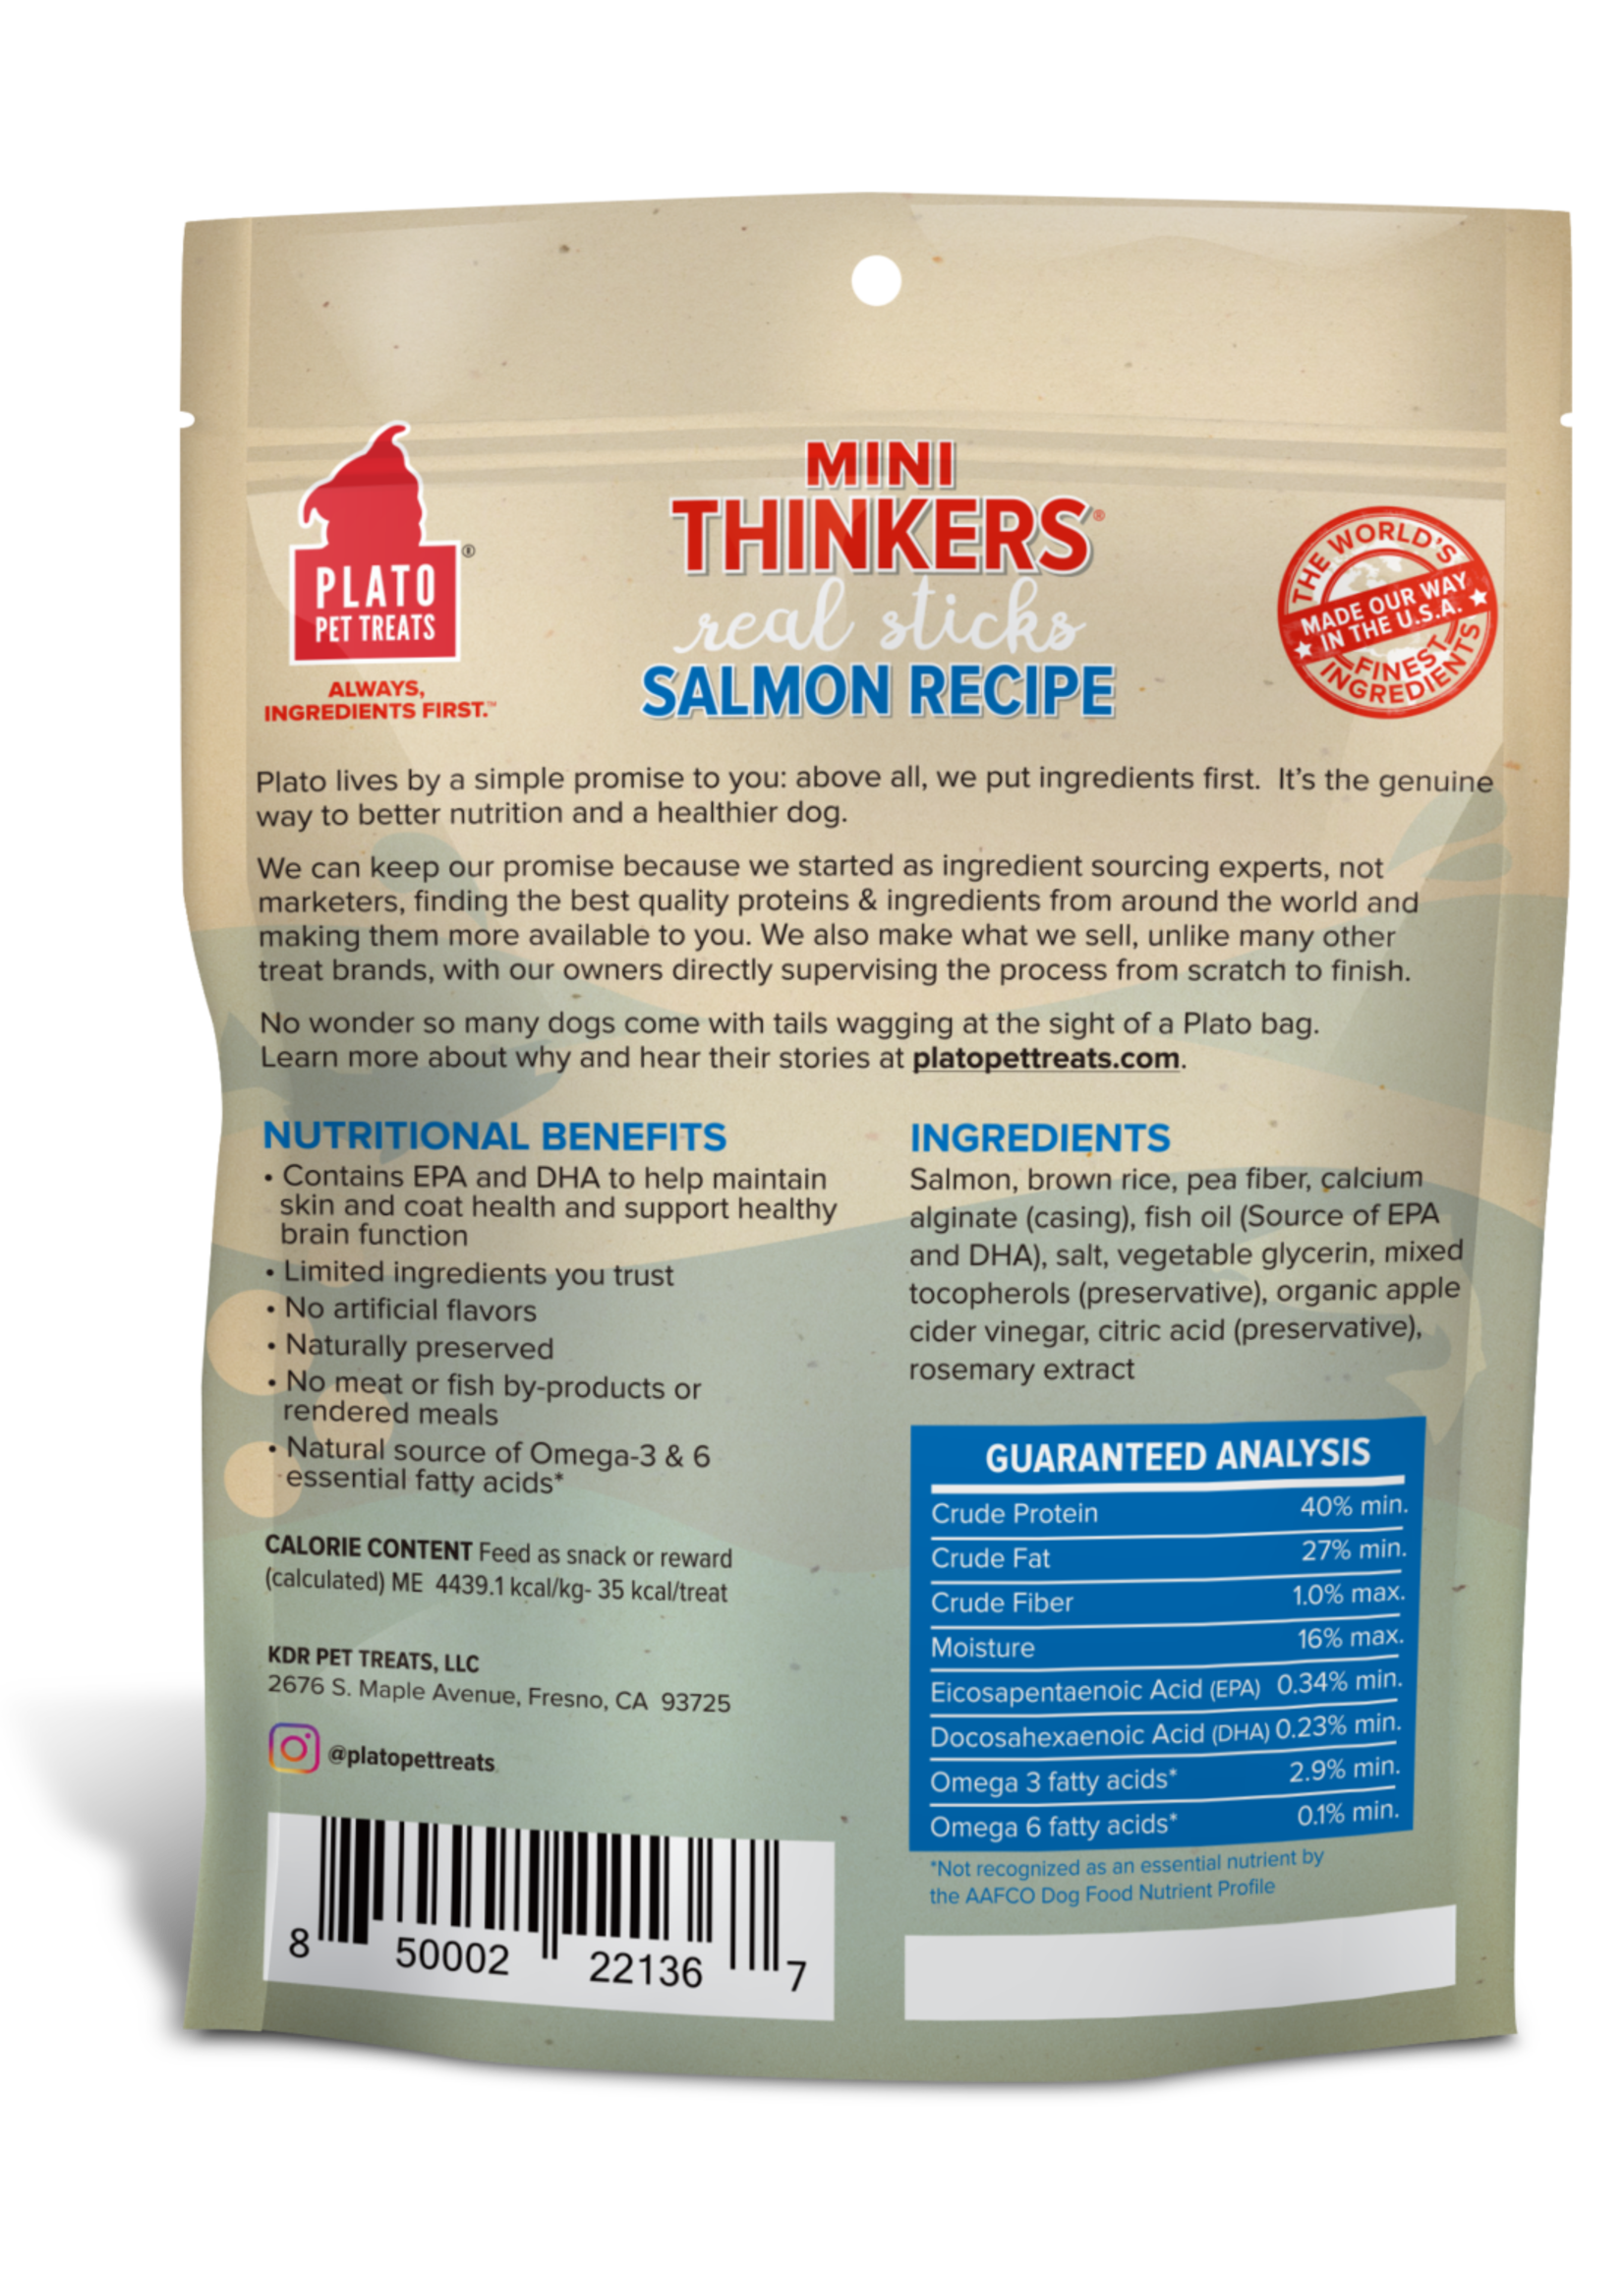 Plato Pet Treats Plato Pet Treats Mini Thinkers Salmon Recipe Meat Sticks Dog Treats 6-oz